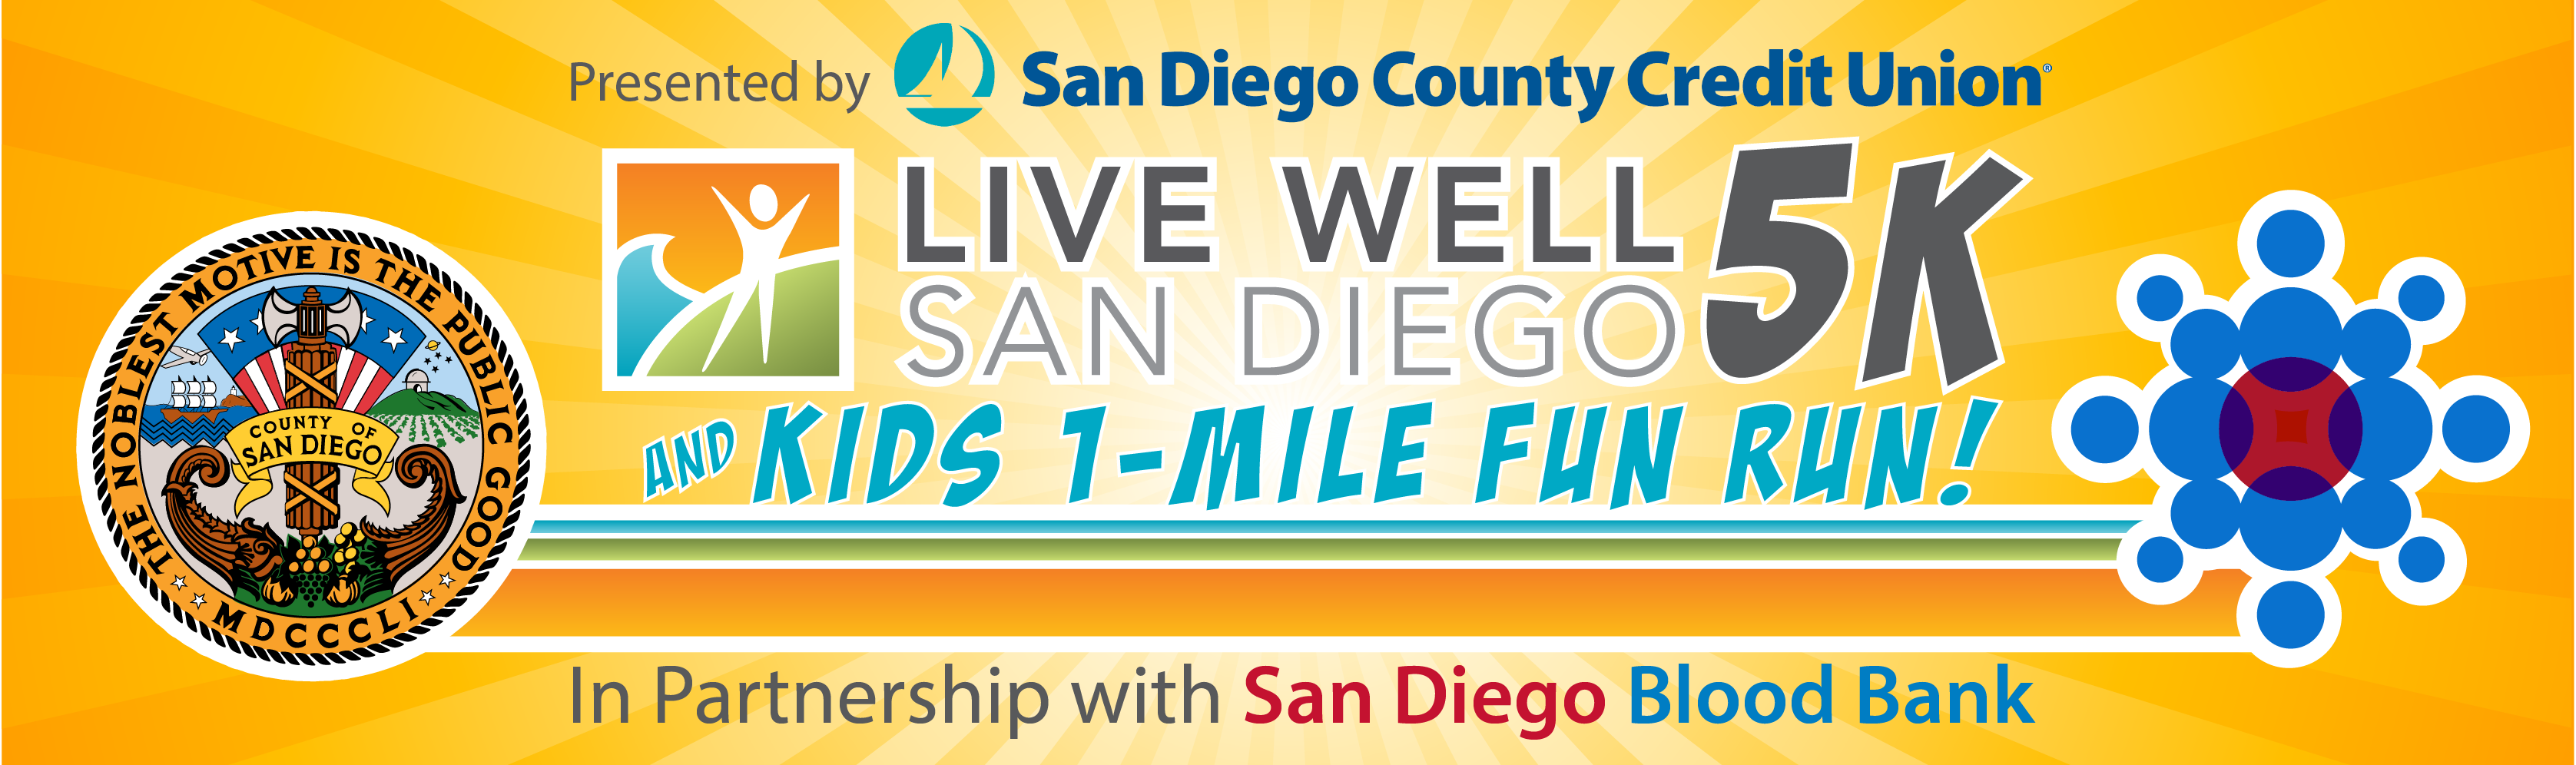 Live Well 5K San Diego